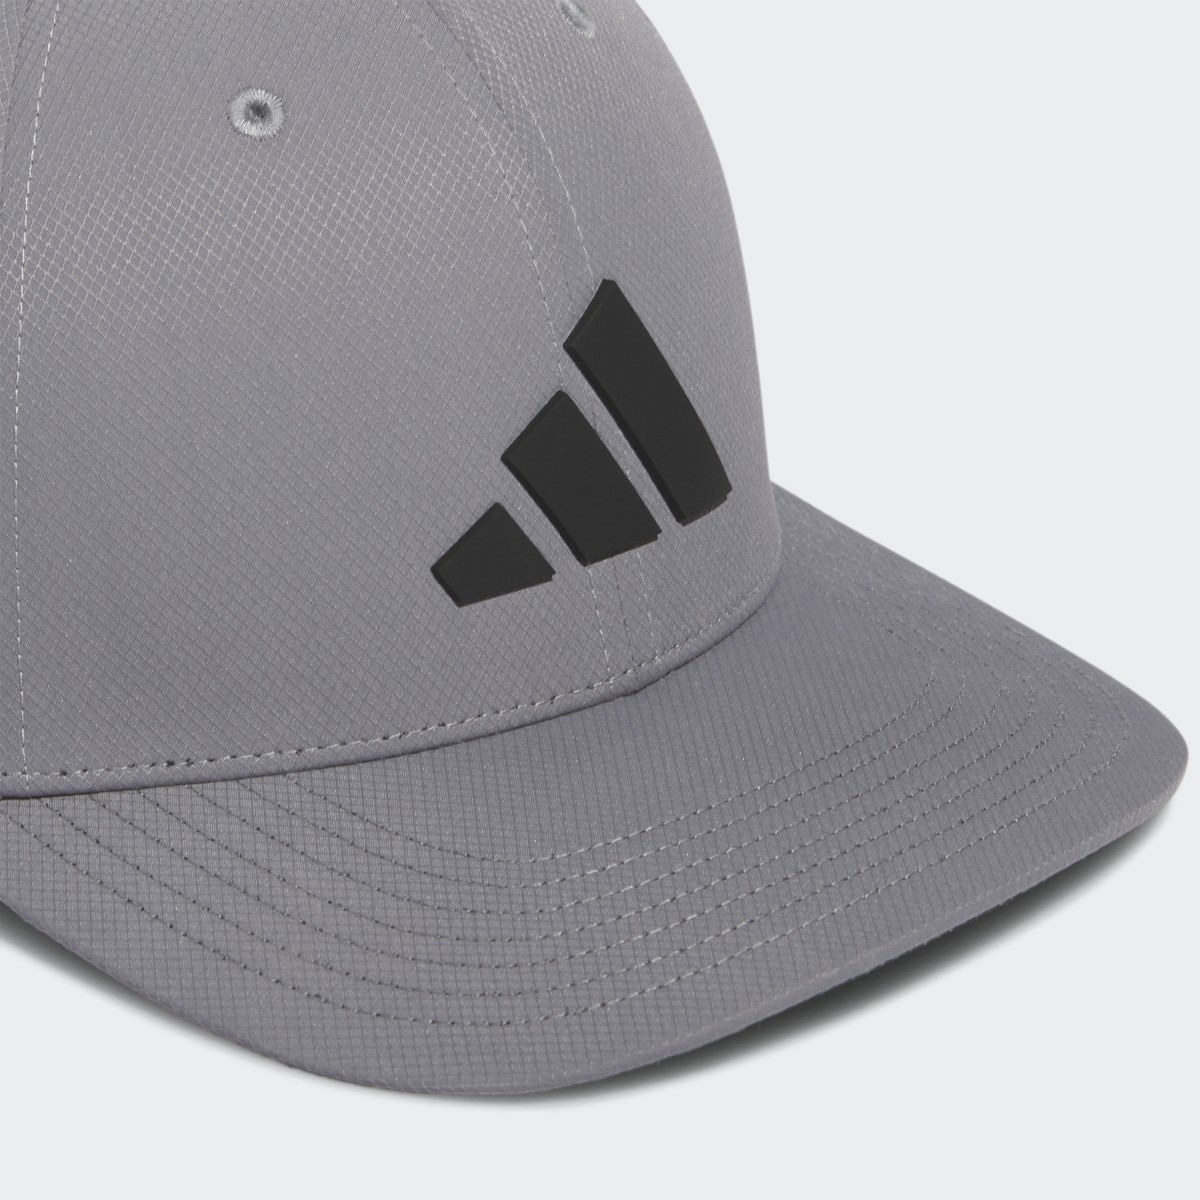 Adidas Tour Snapback Golf Hat. 4